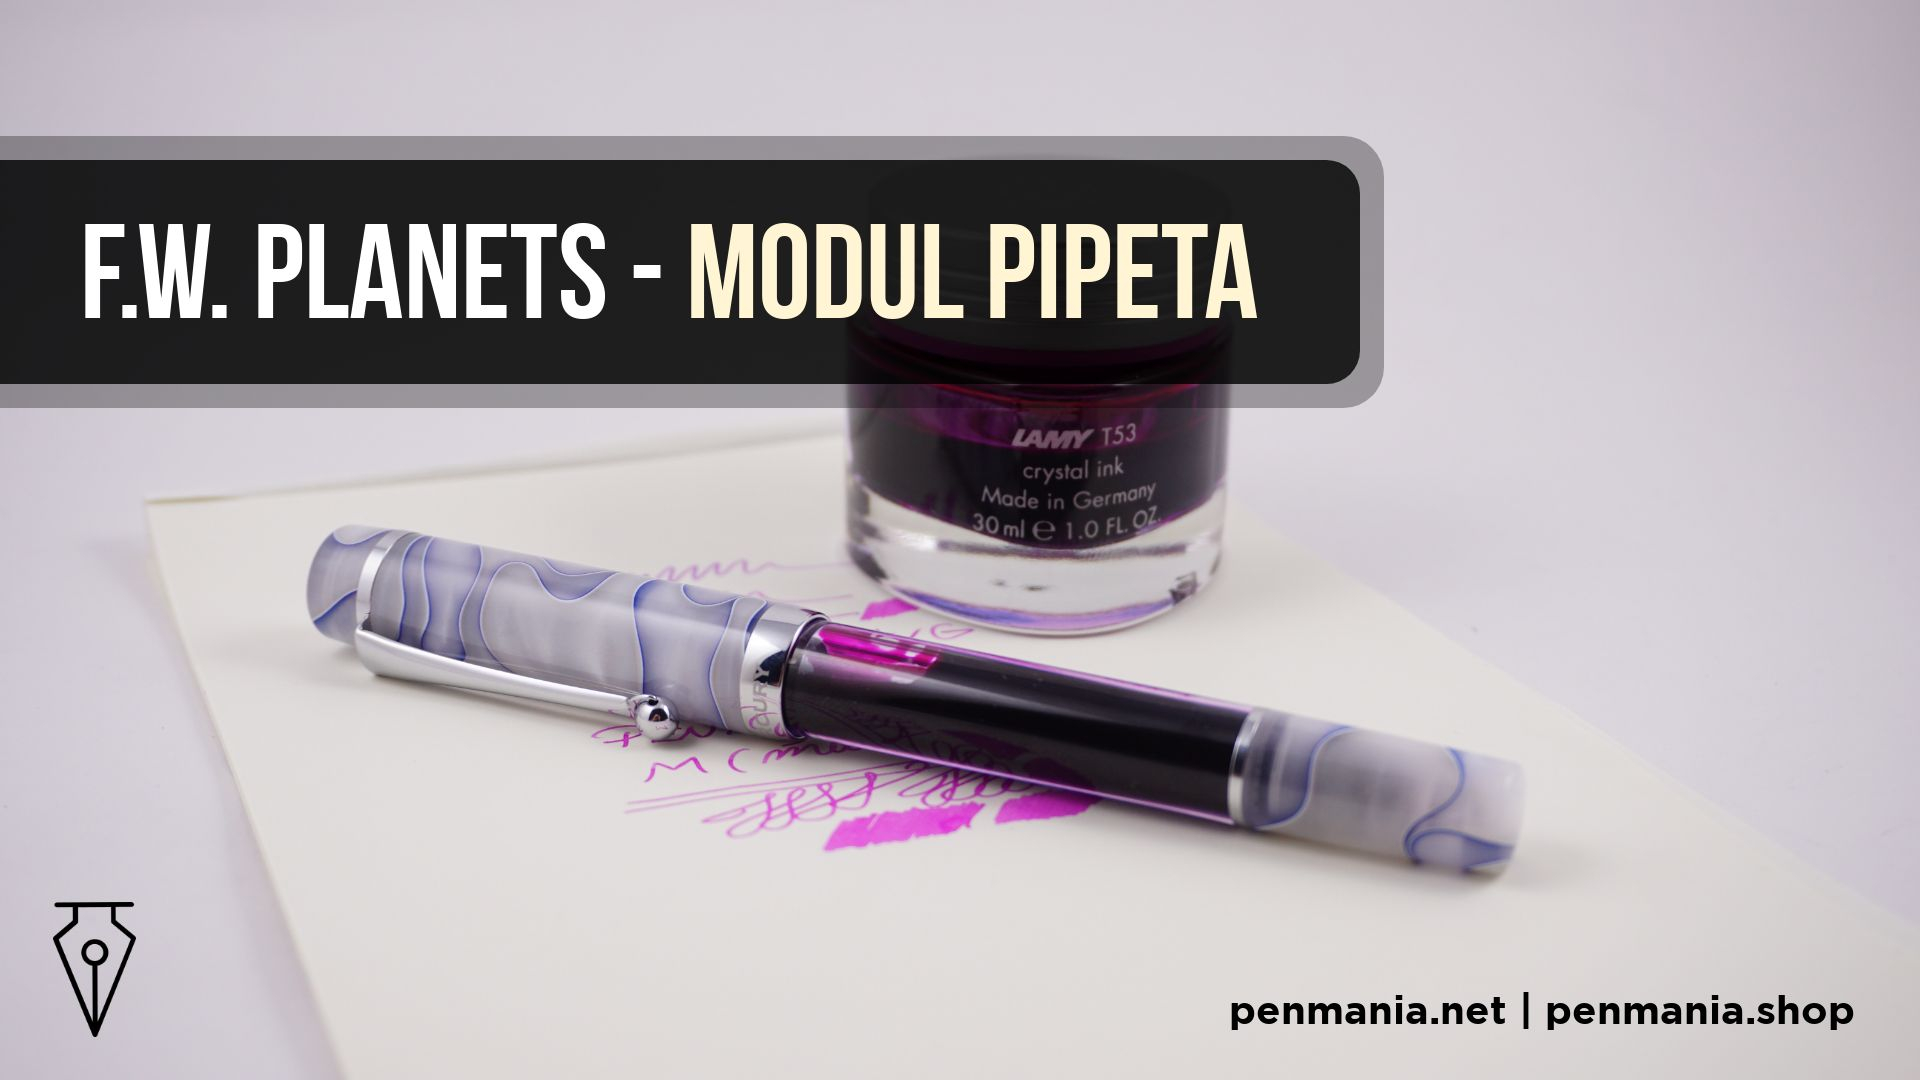 Coperta Video Modul Pipeta Stilou Fine Writing Planets Penmania Shop